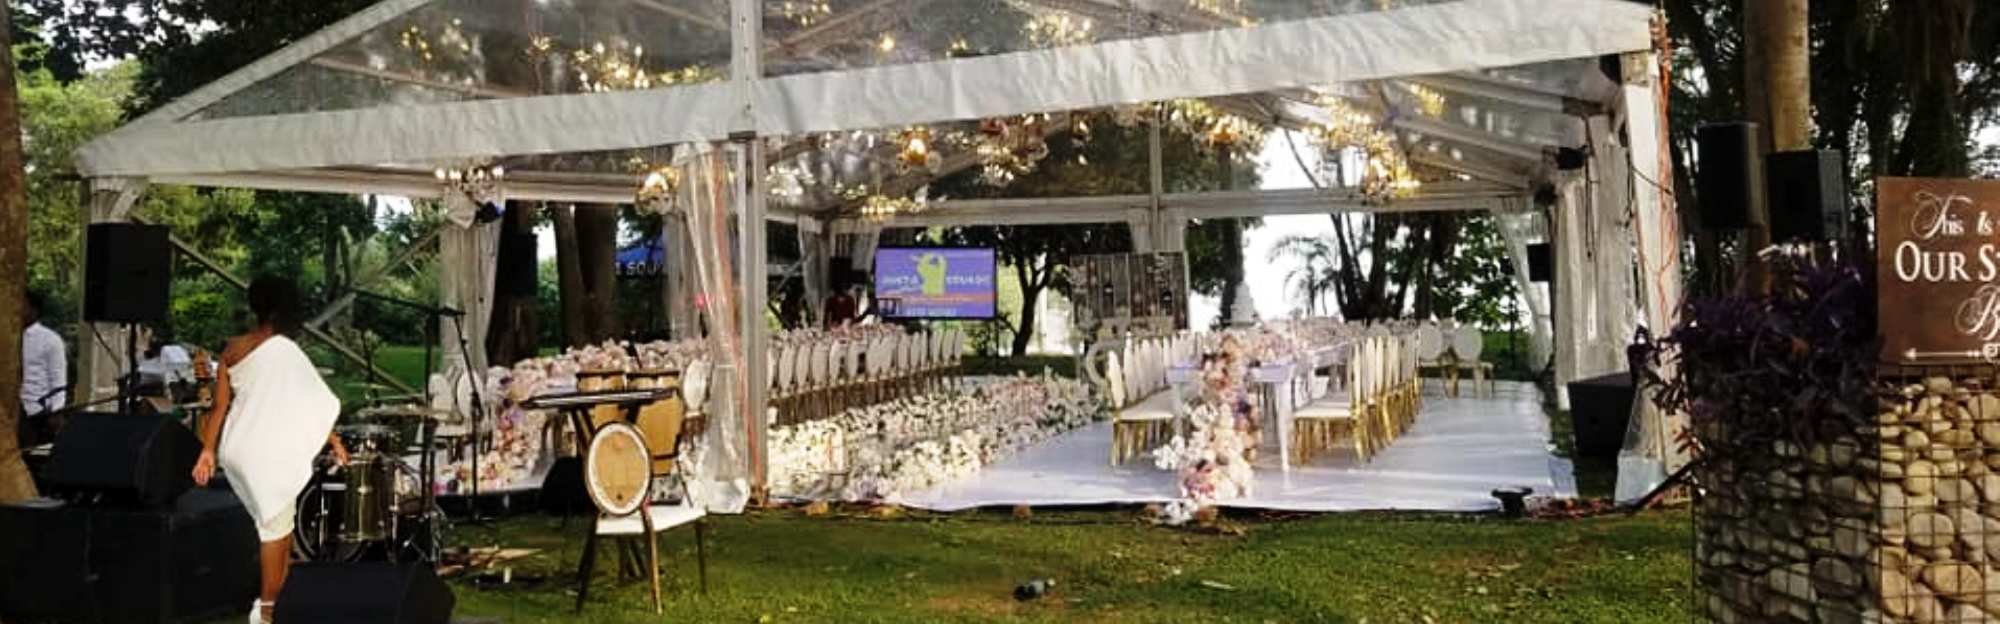 The Estate Bwerenga Weddings